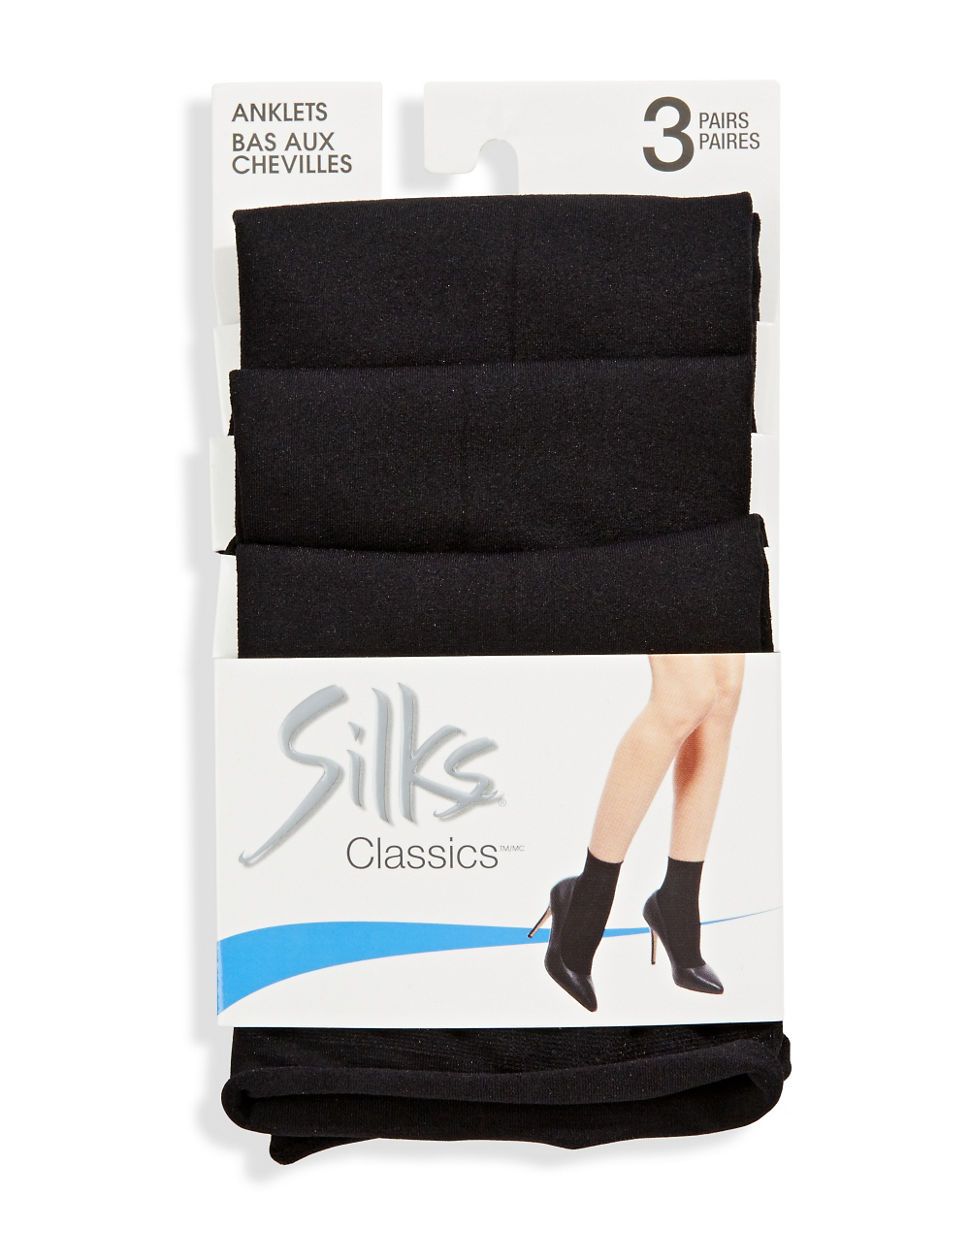 Silks Classics - Anklets